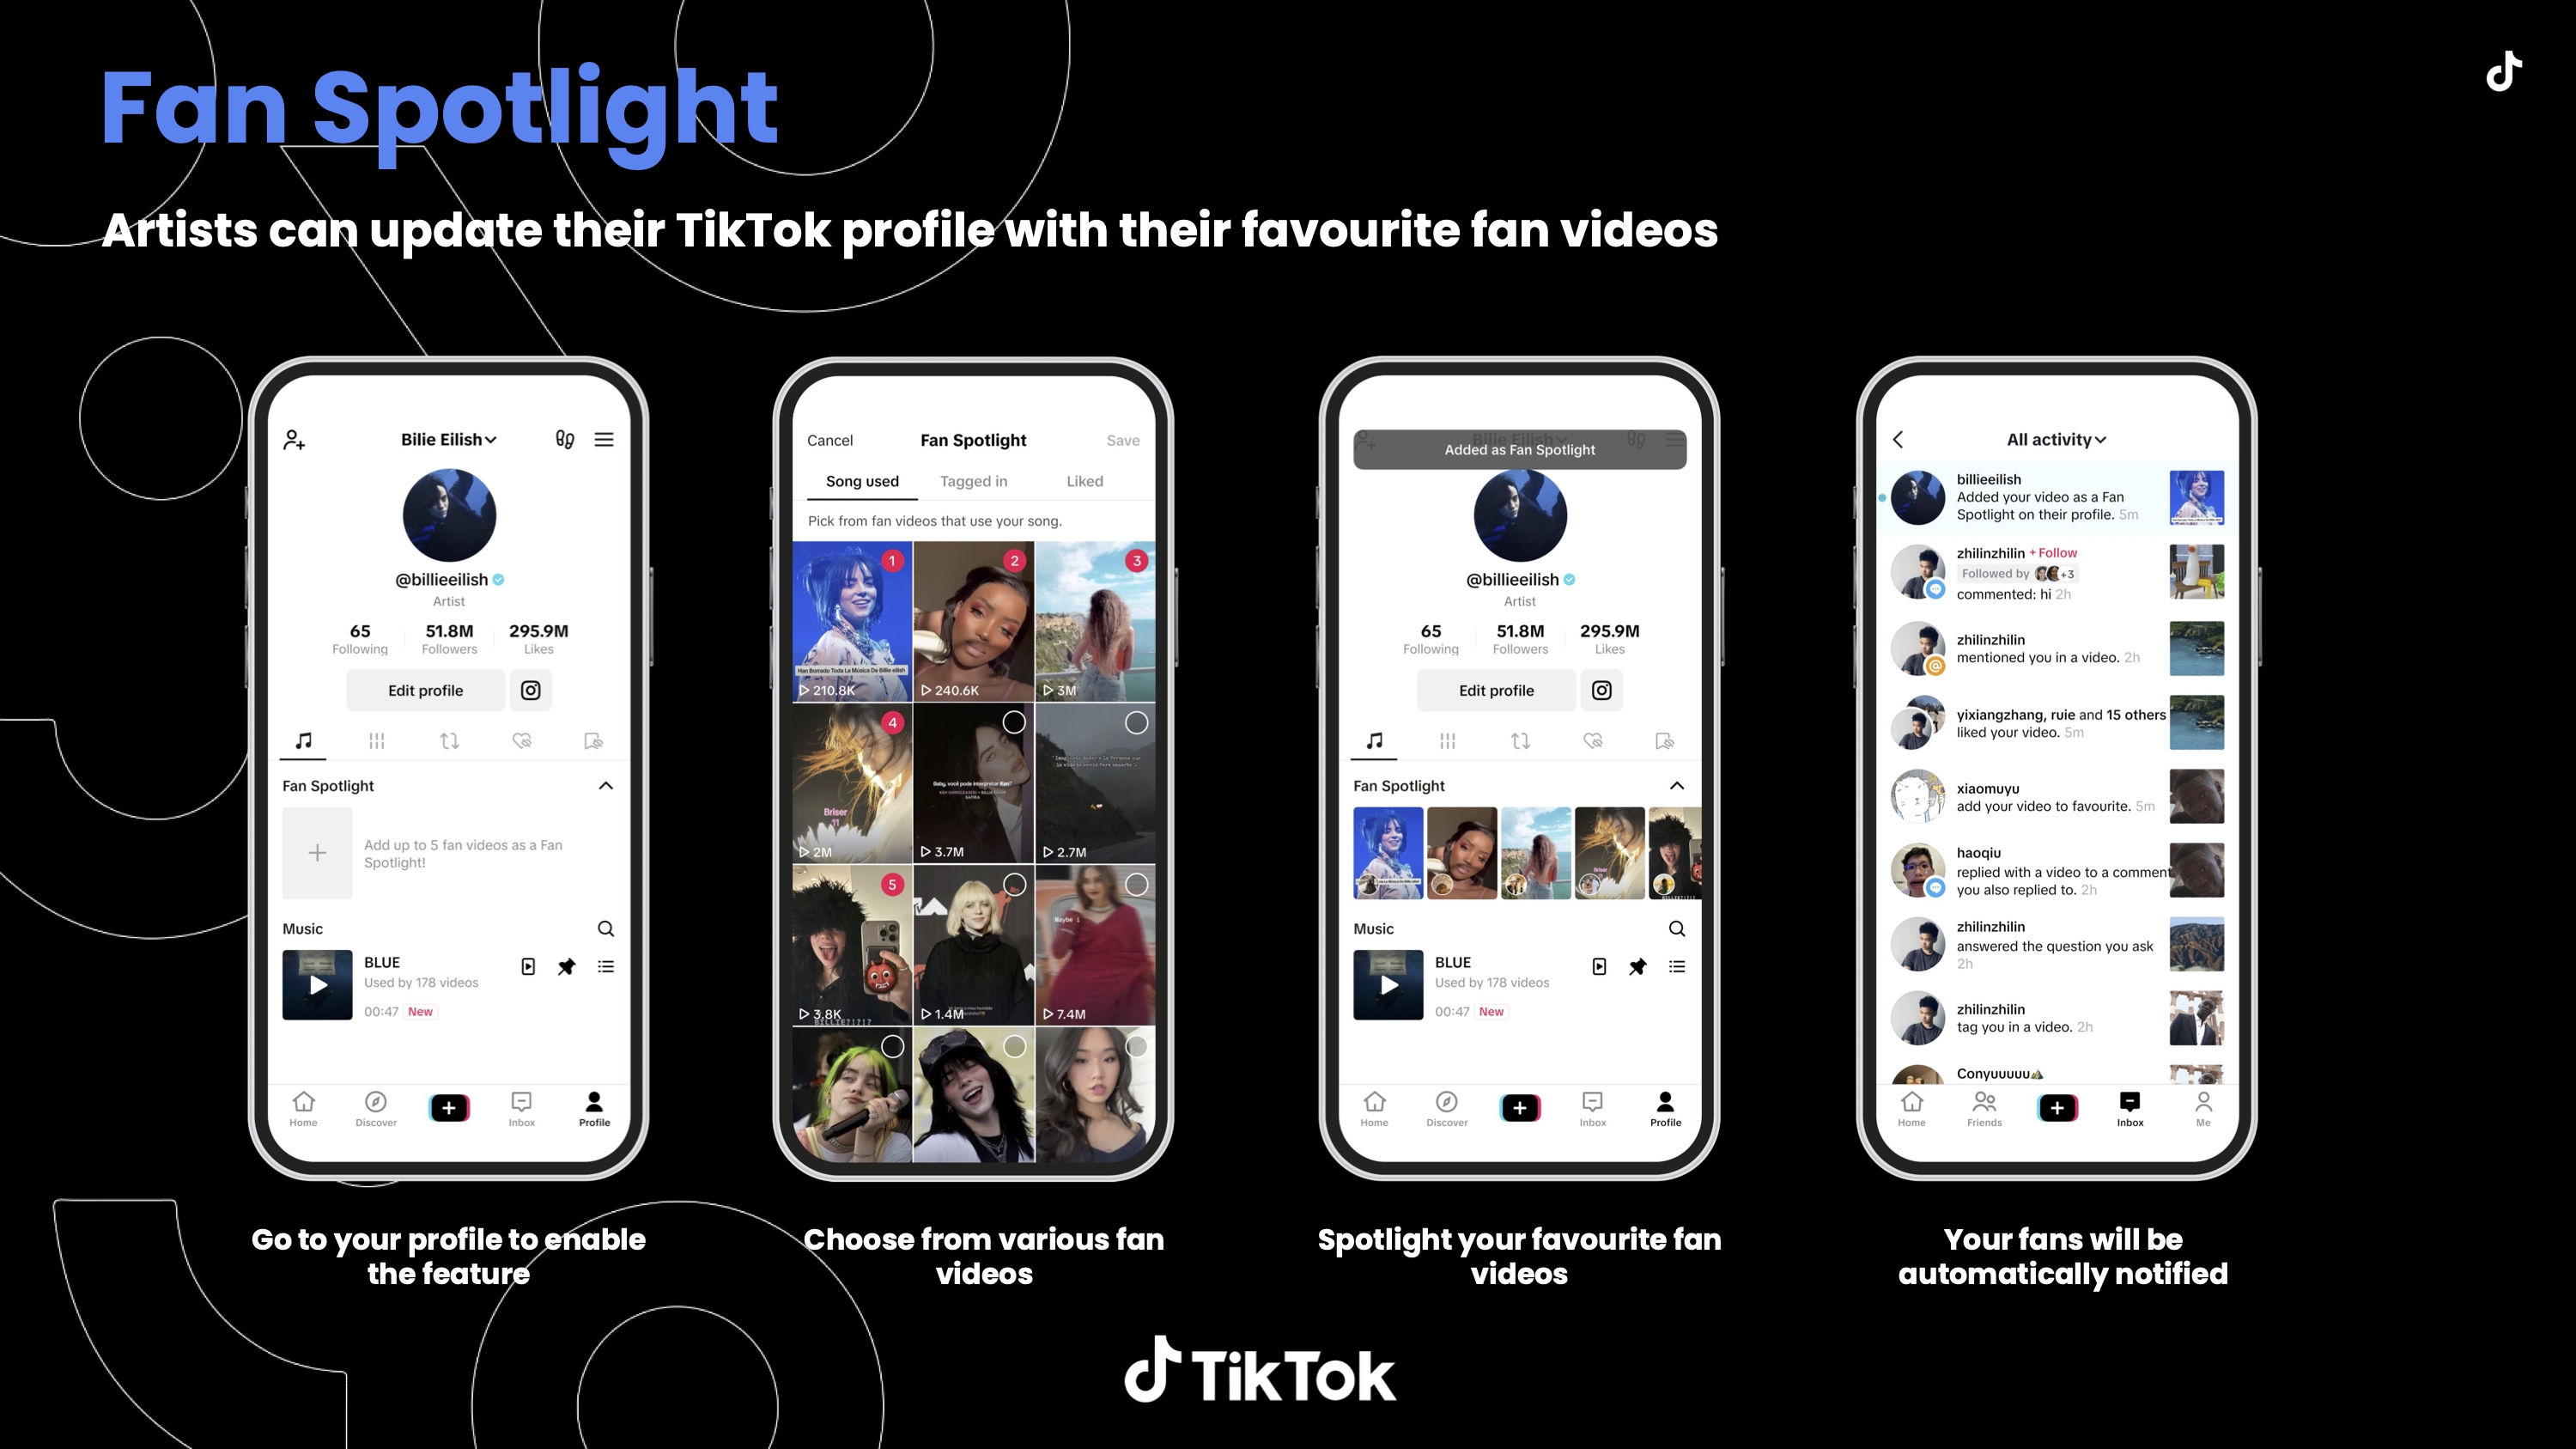 TikTok unveils their new Fan Spotlight feature